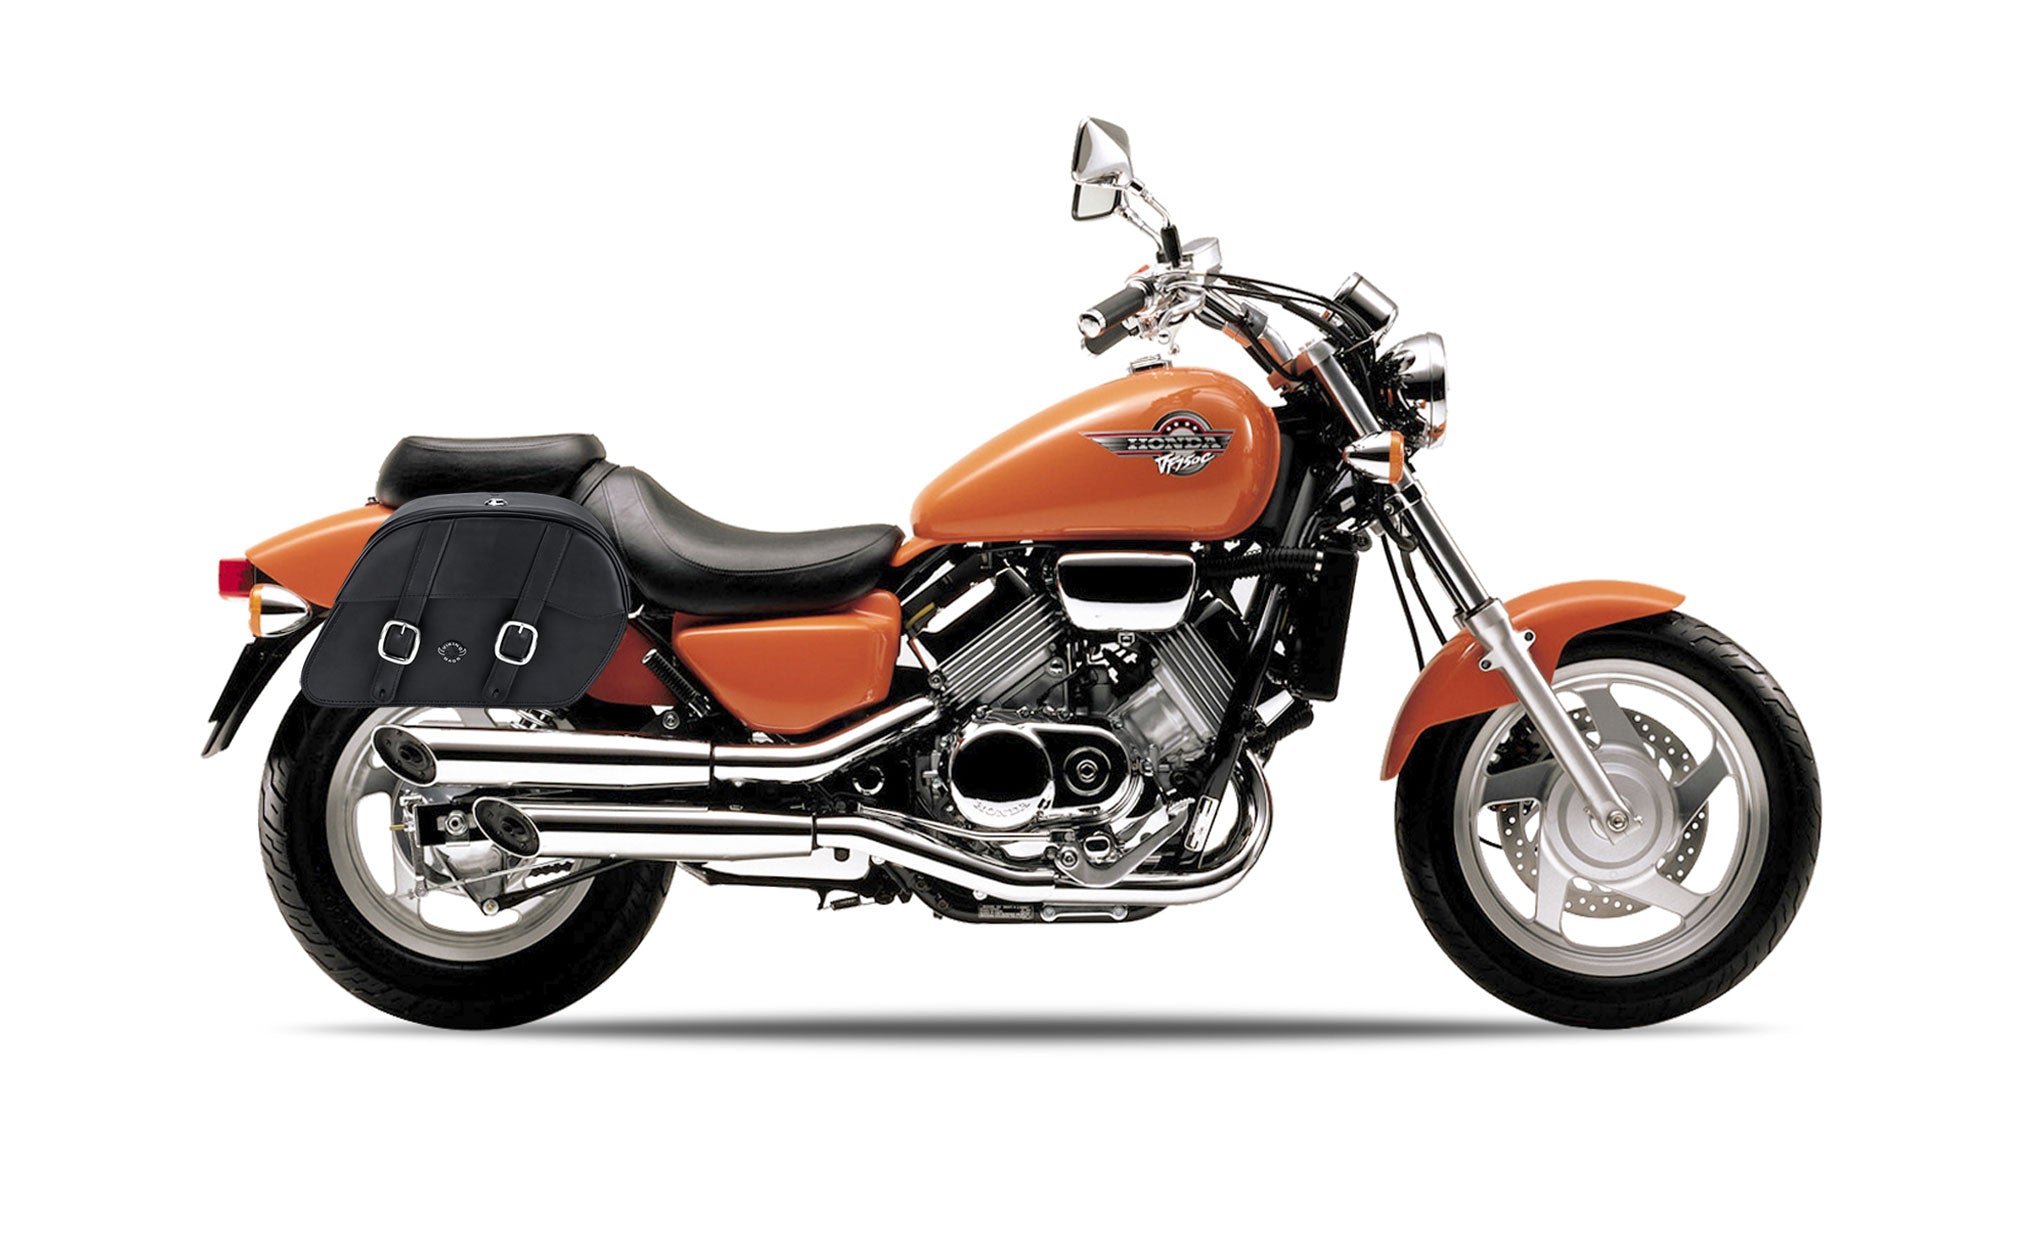 Viking Skarner Medium Lockable Honda Magna 750 Vf750C Leather Motorcycle Saddlebags on Bike Photo @expand